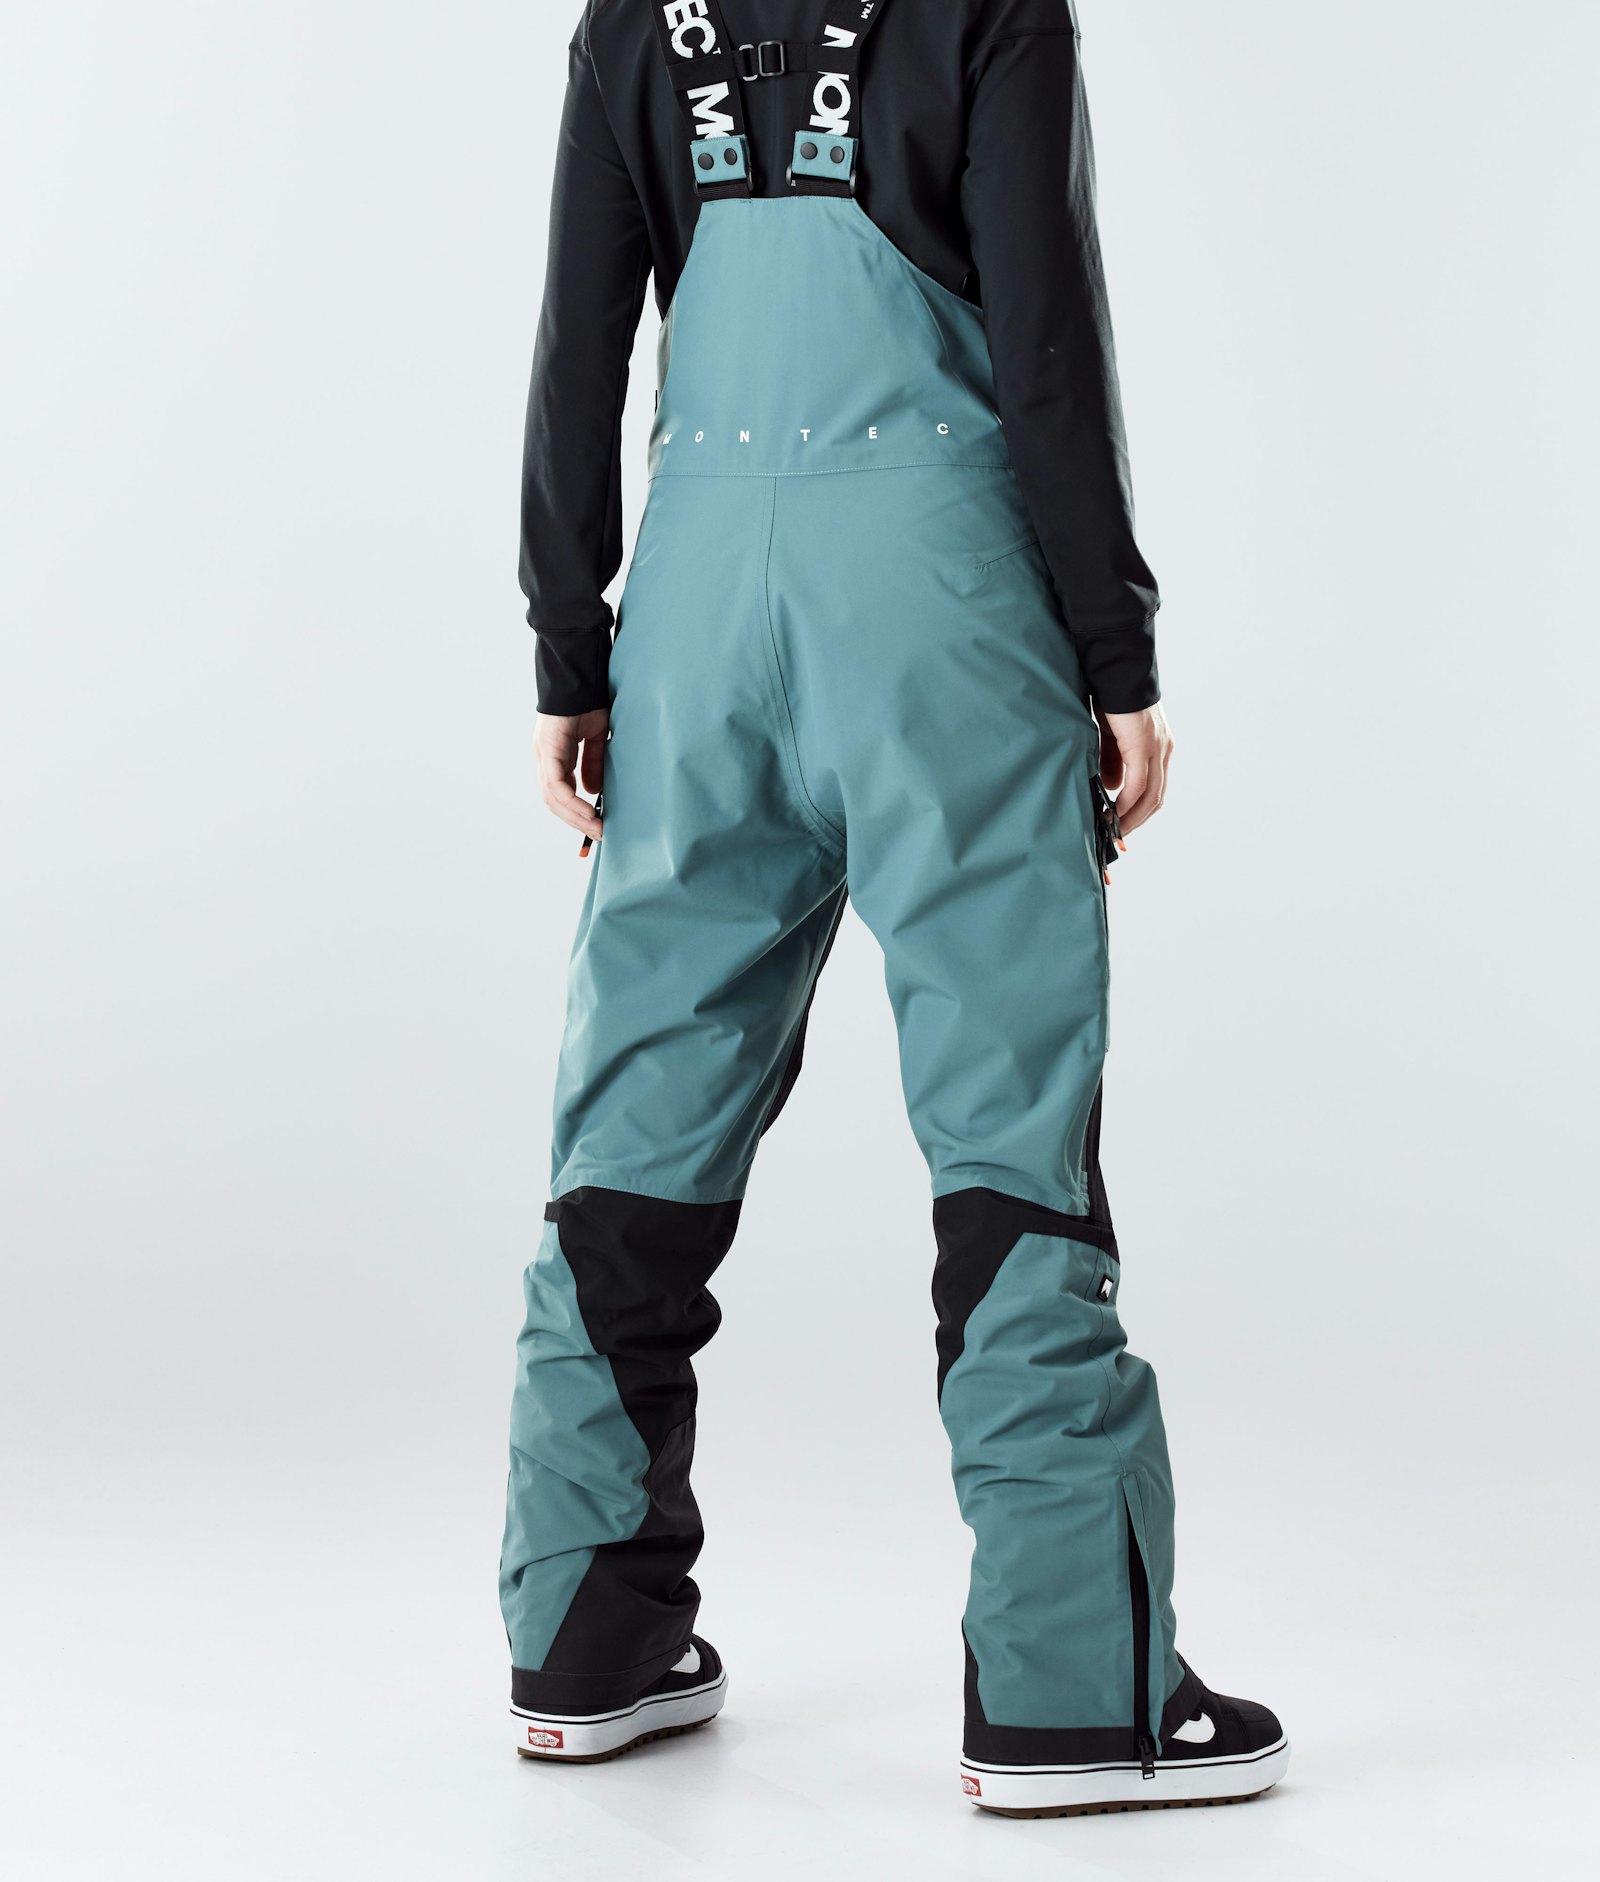 Fawk W 2020 Pantalon de Snowboard Femme Atlantic/Black